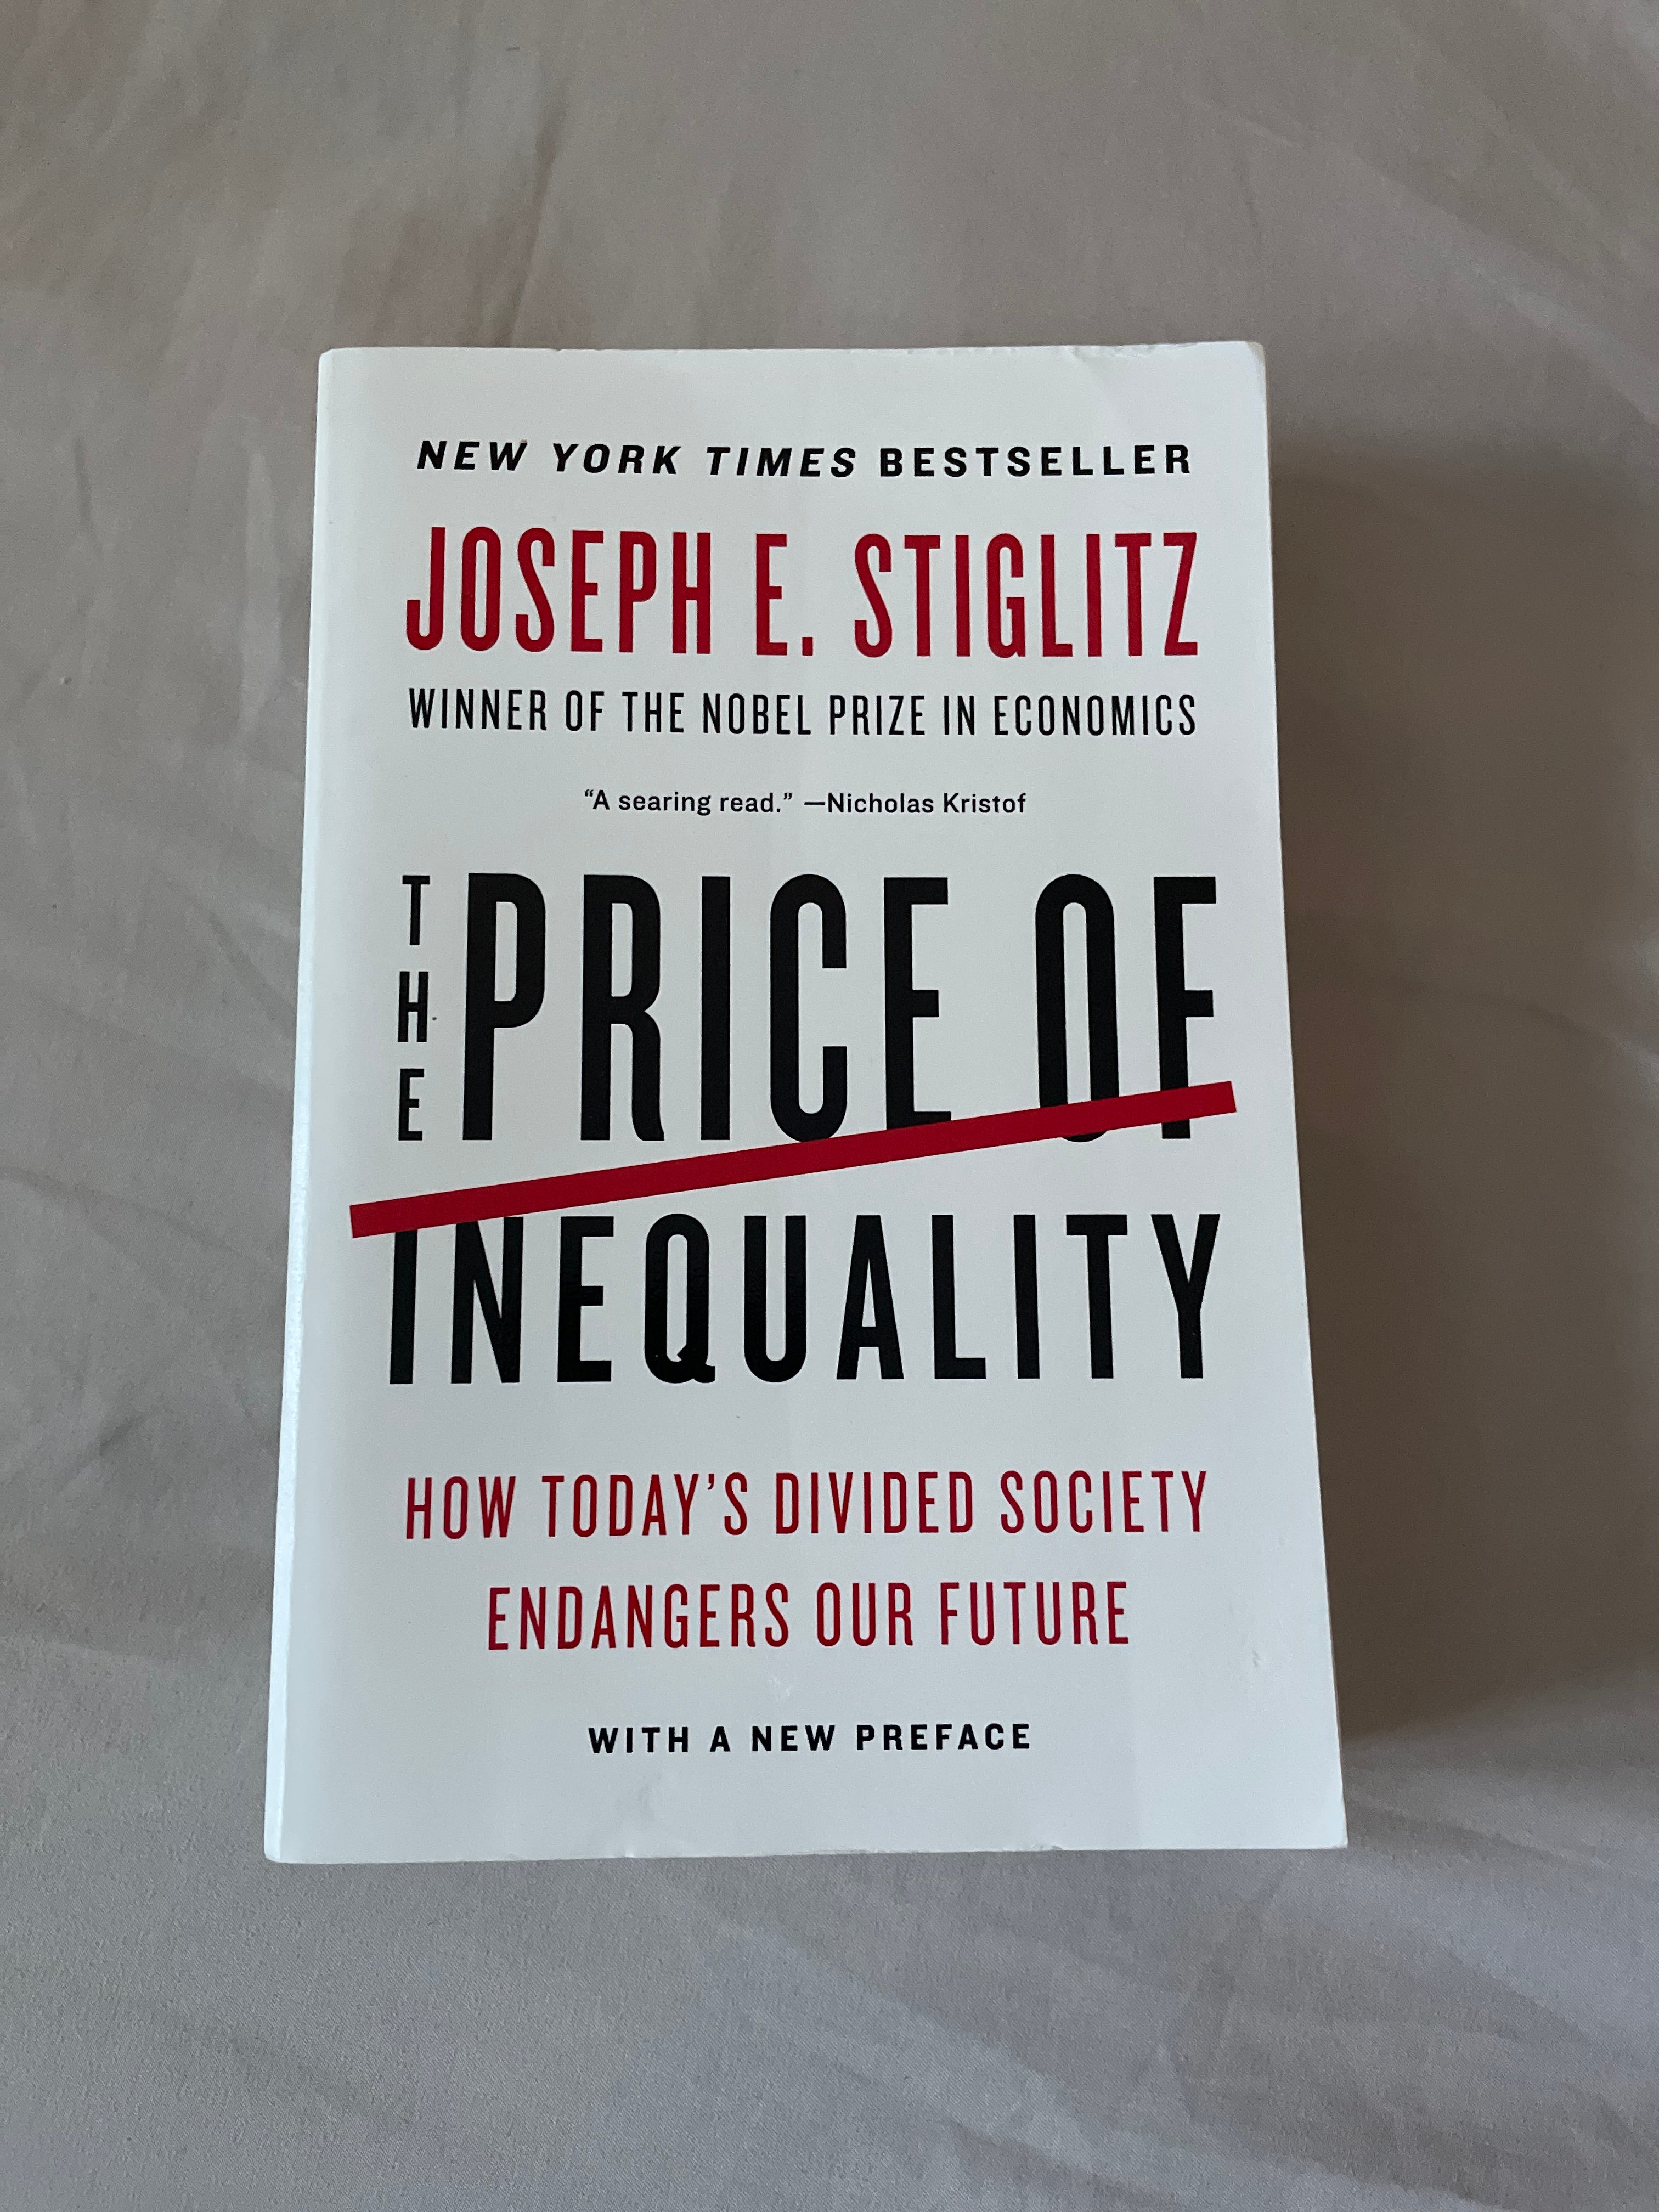 Paperback　Pangobooks　E.　Price　Inequality　Joseph　by　Stiglitz,　The　of